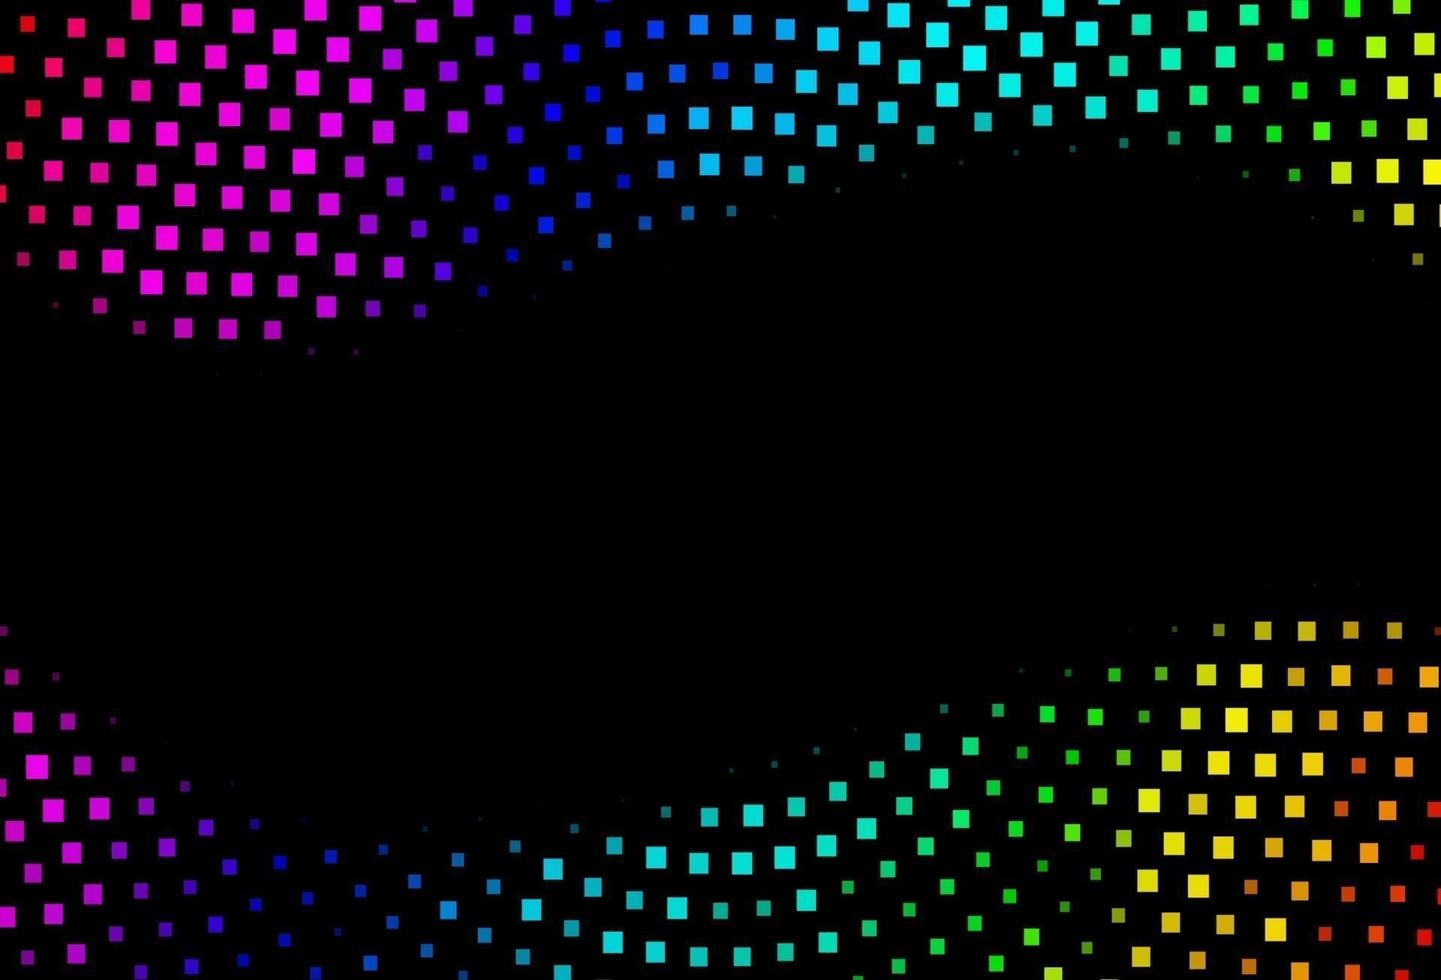 dunkle mehrfarbige, regenbogenfarbene Vektortextur im rechteckigen Stil. vektor